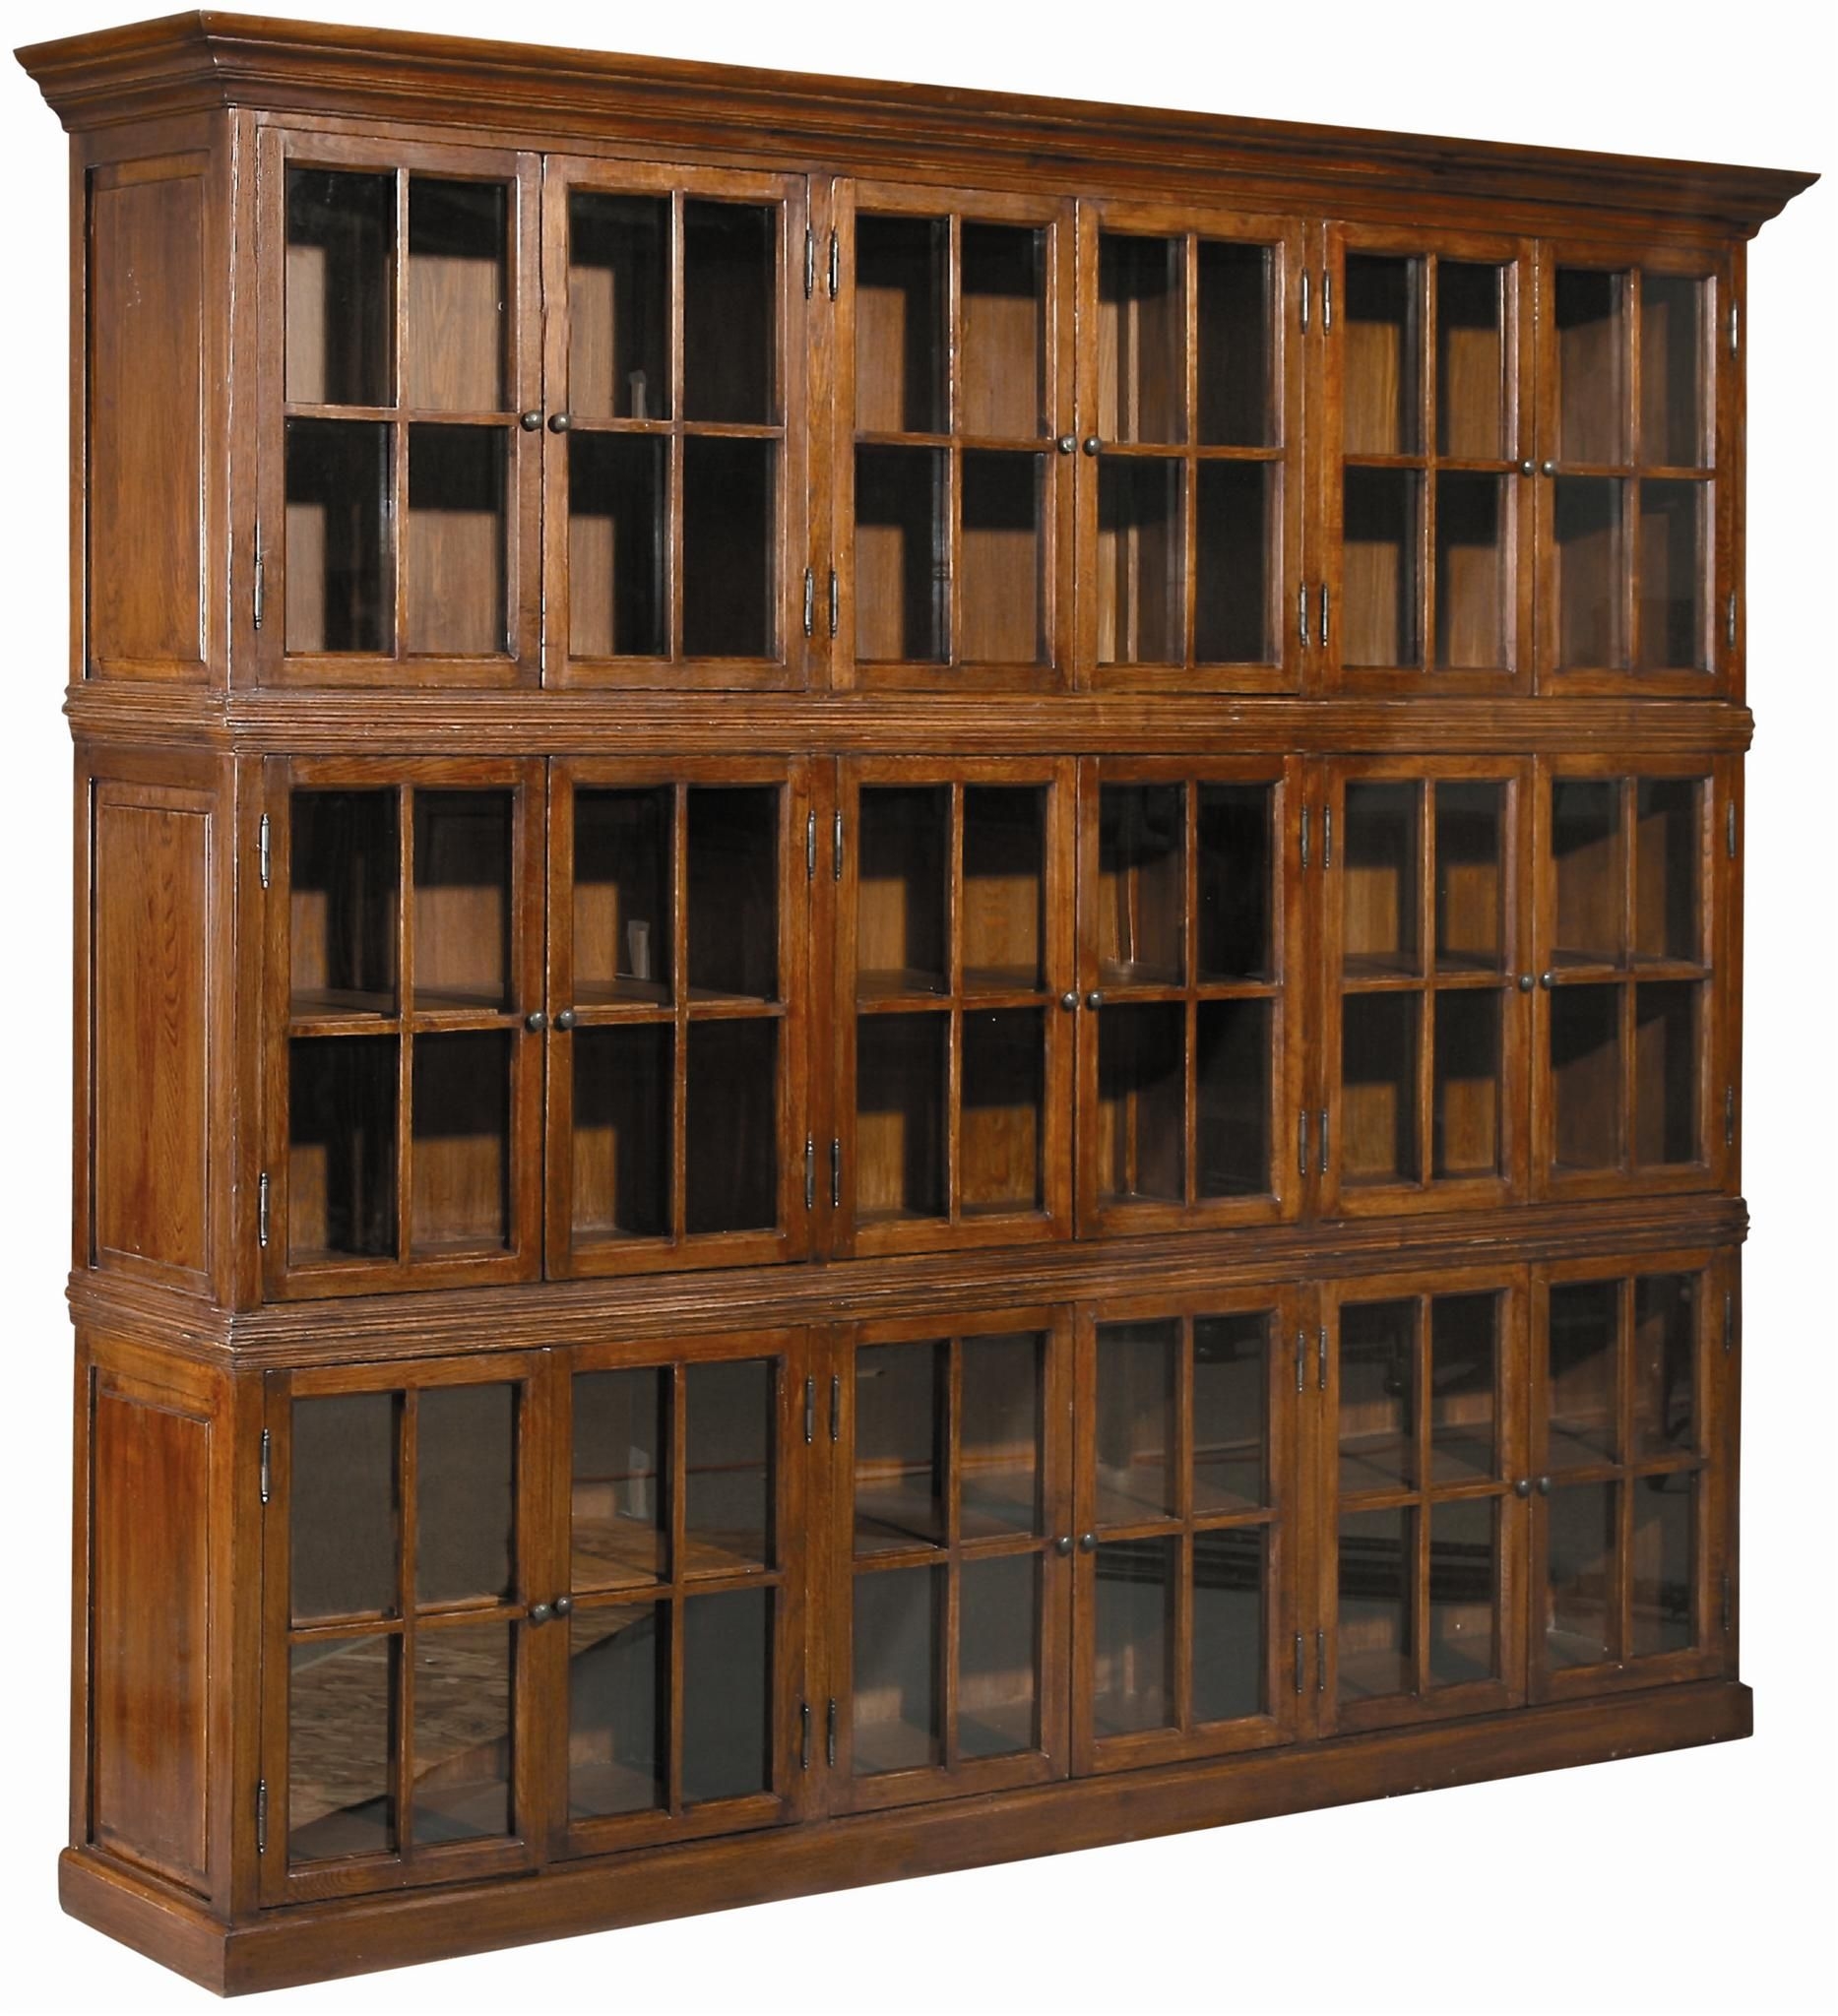 Oak bookcases with doors 6